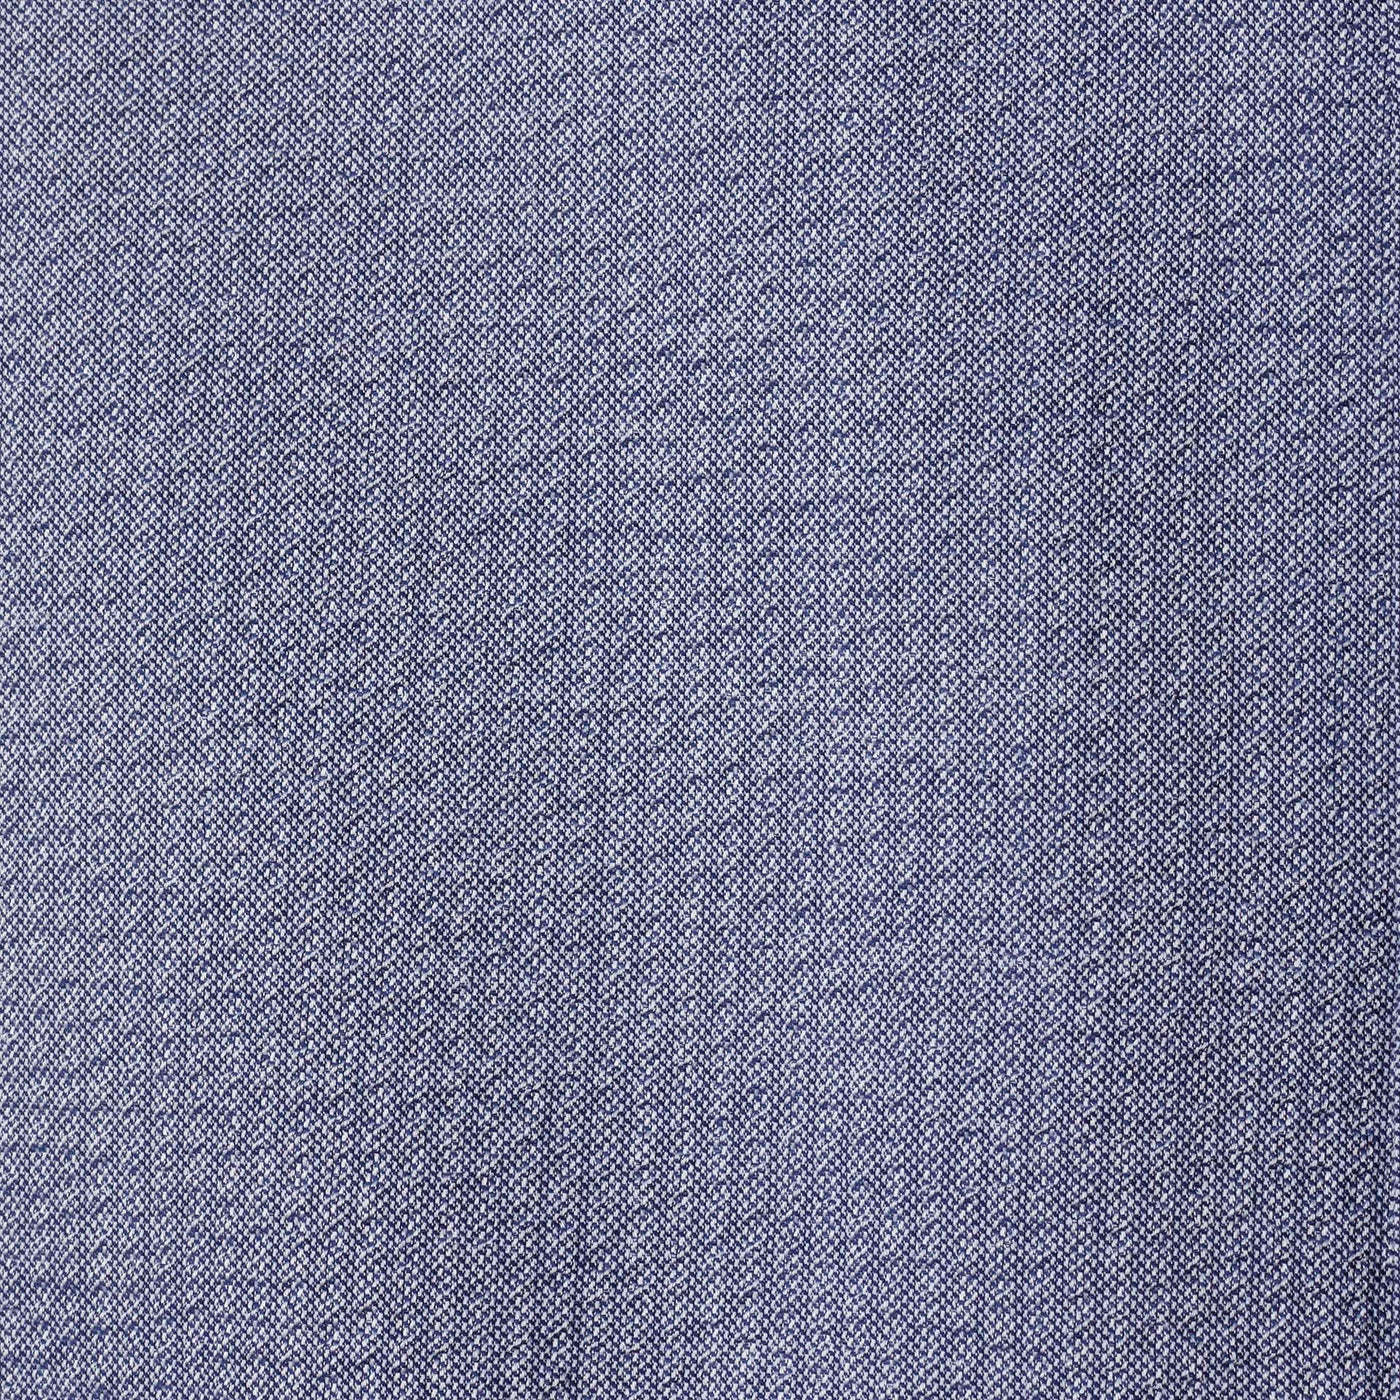 Cotton Stripe Short Sleeve Shirt - Grey Whale Blue